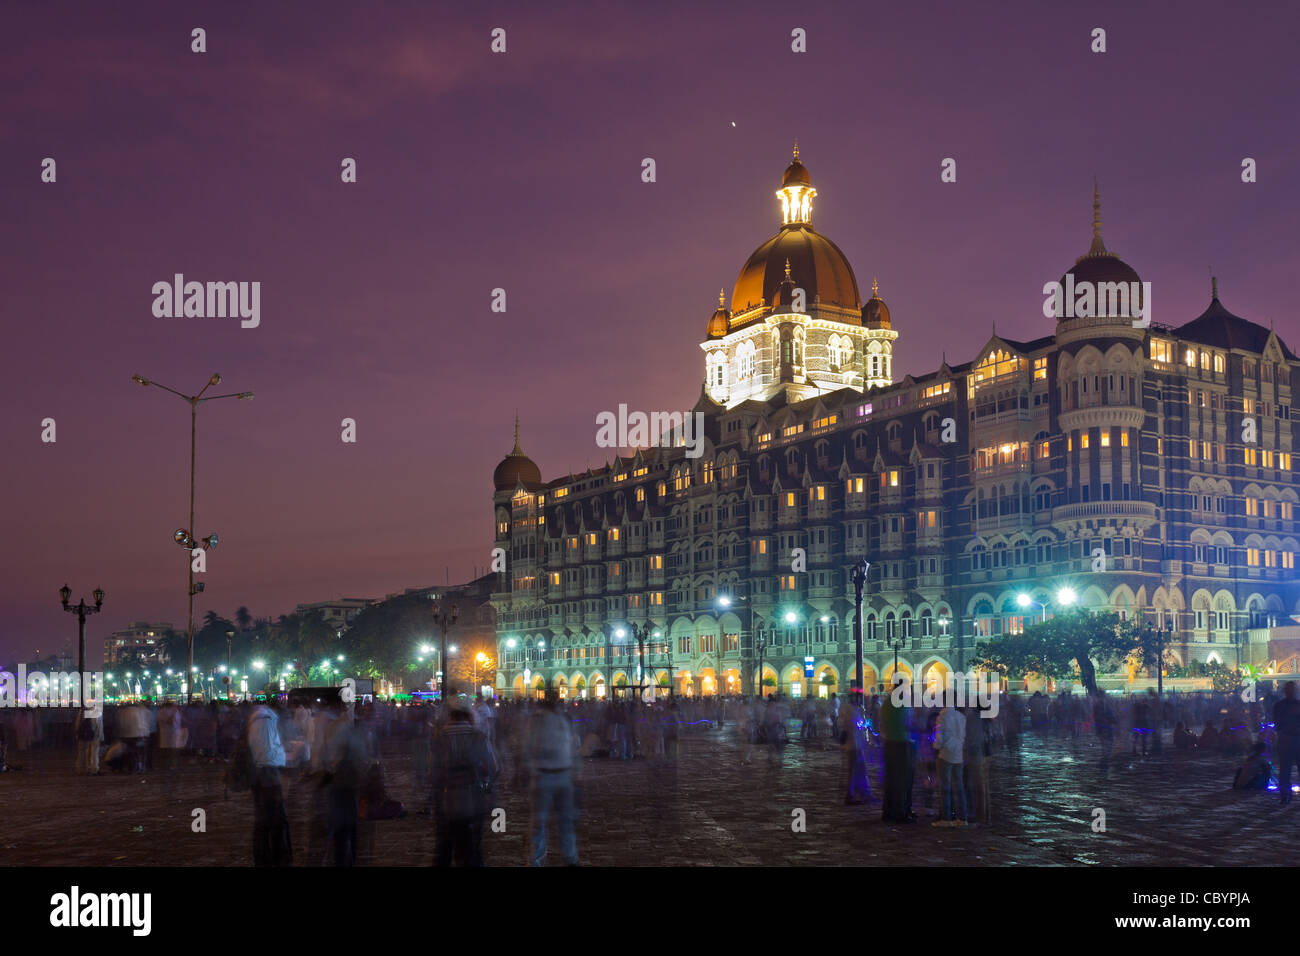 Das Taj Mahal Palace Hotel in Mumbai Bombay Indien Stockfoto